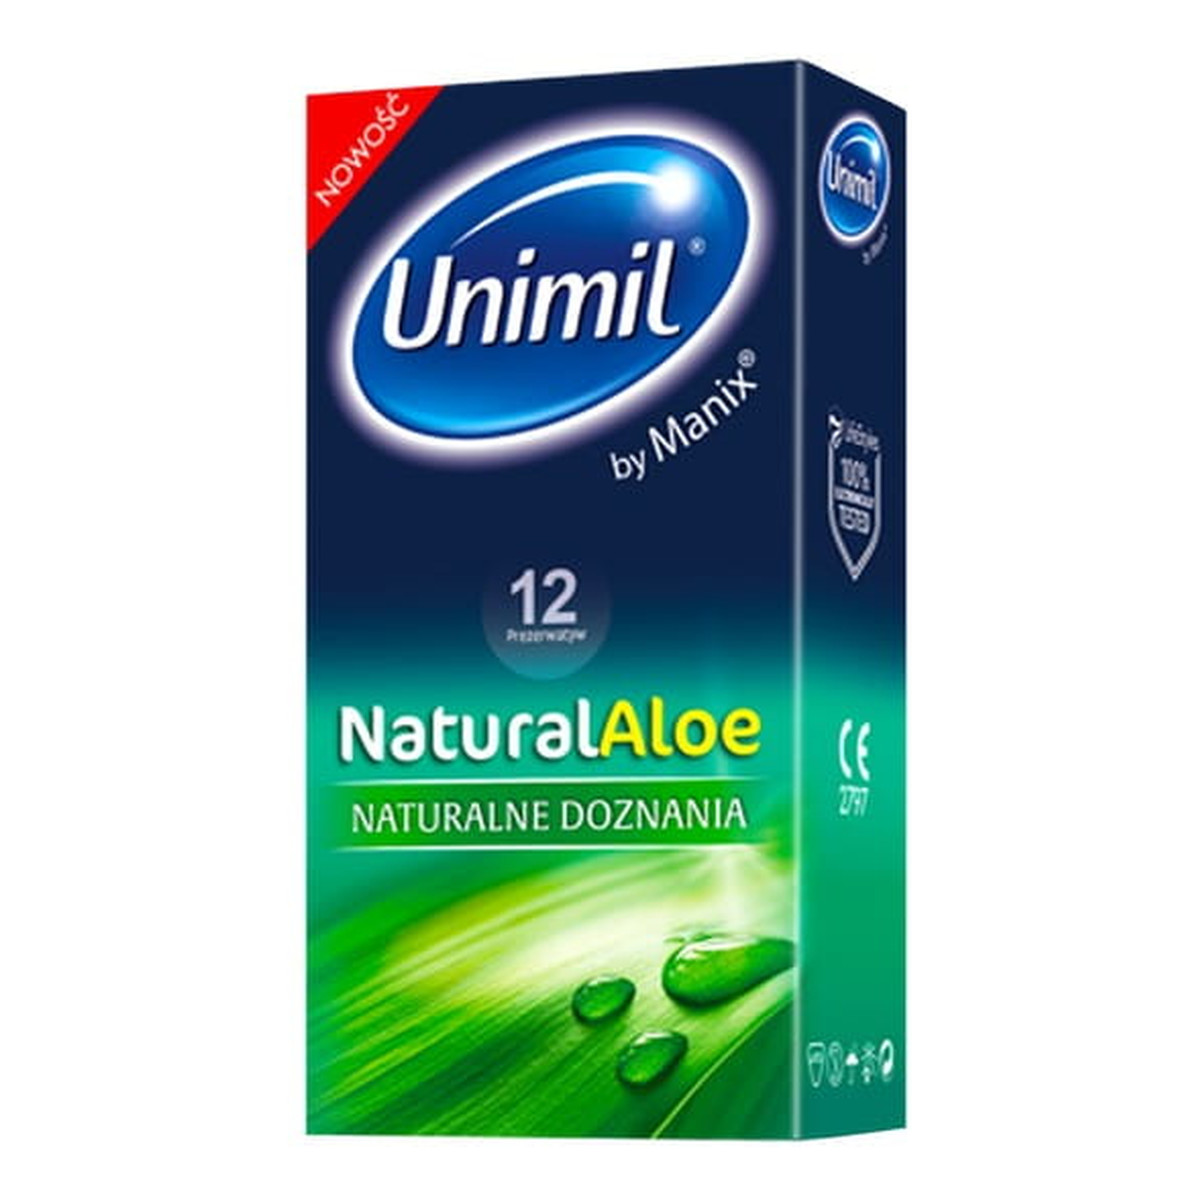 Unimil Natural aloe lateksowe prezerwatywy 12szt